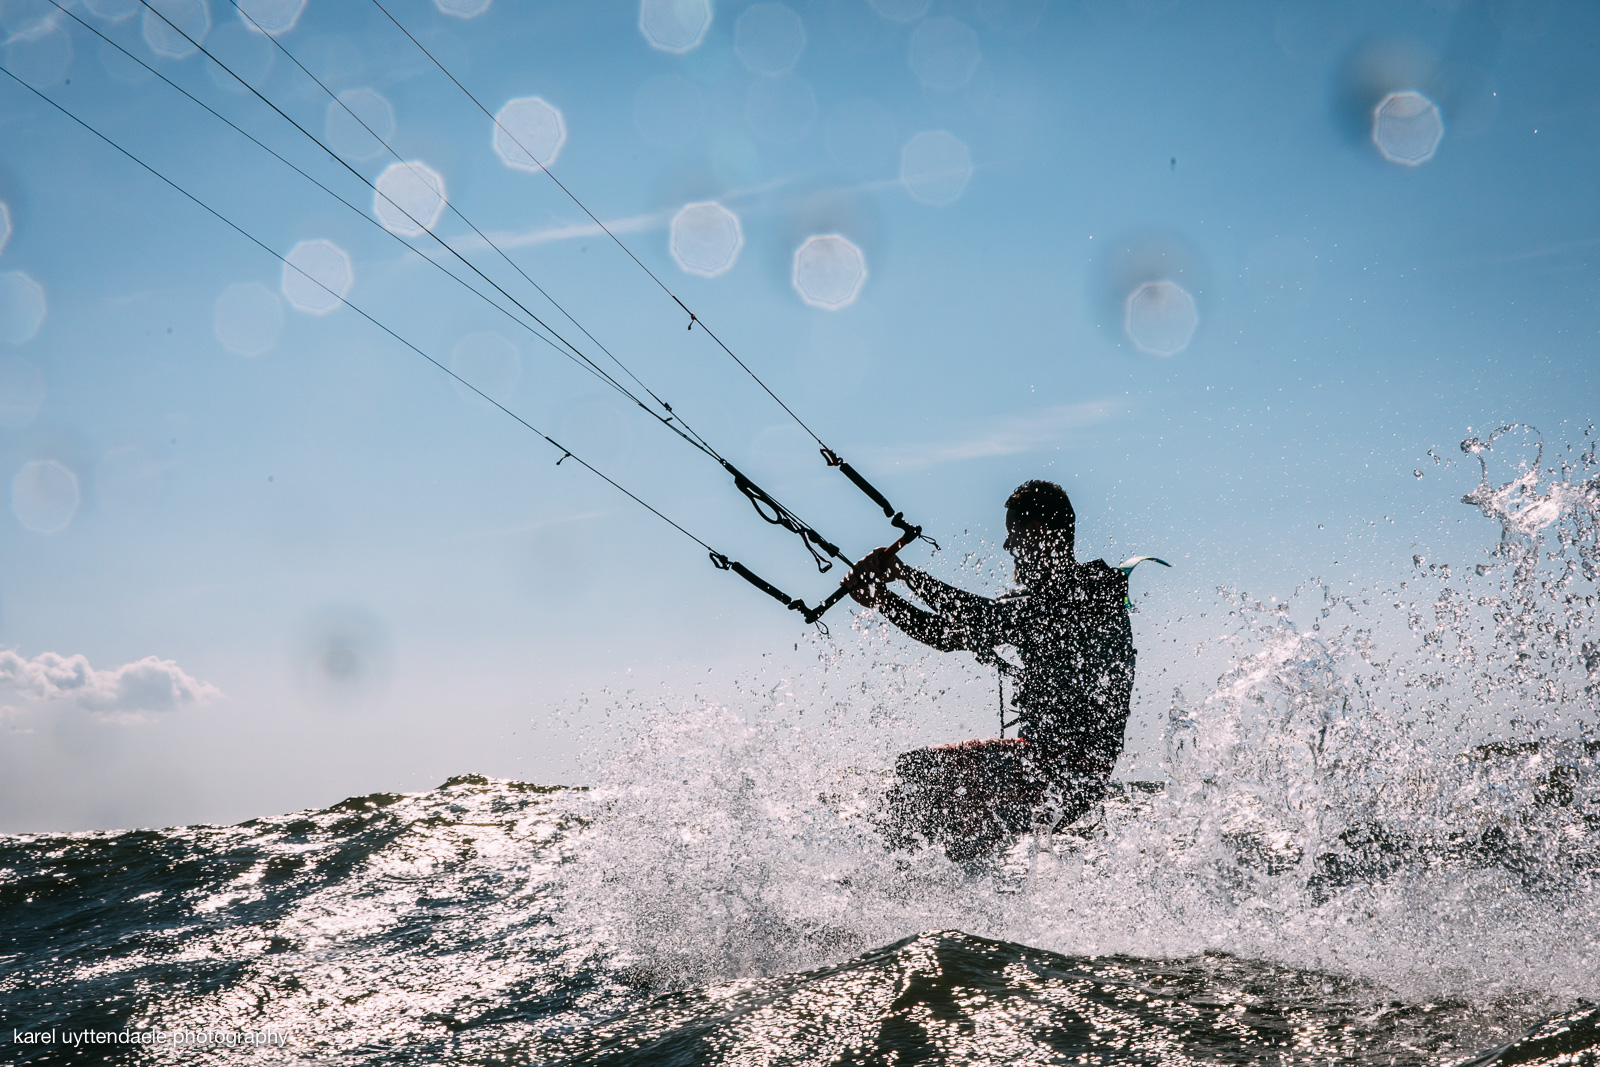 Kite &amp; windsurfing shoot - Windekind - July '18